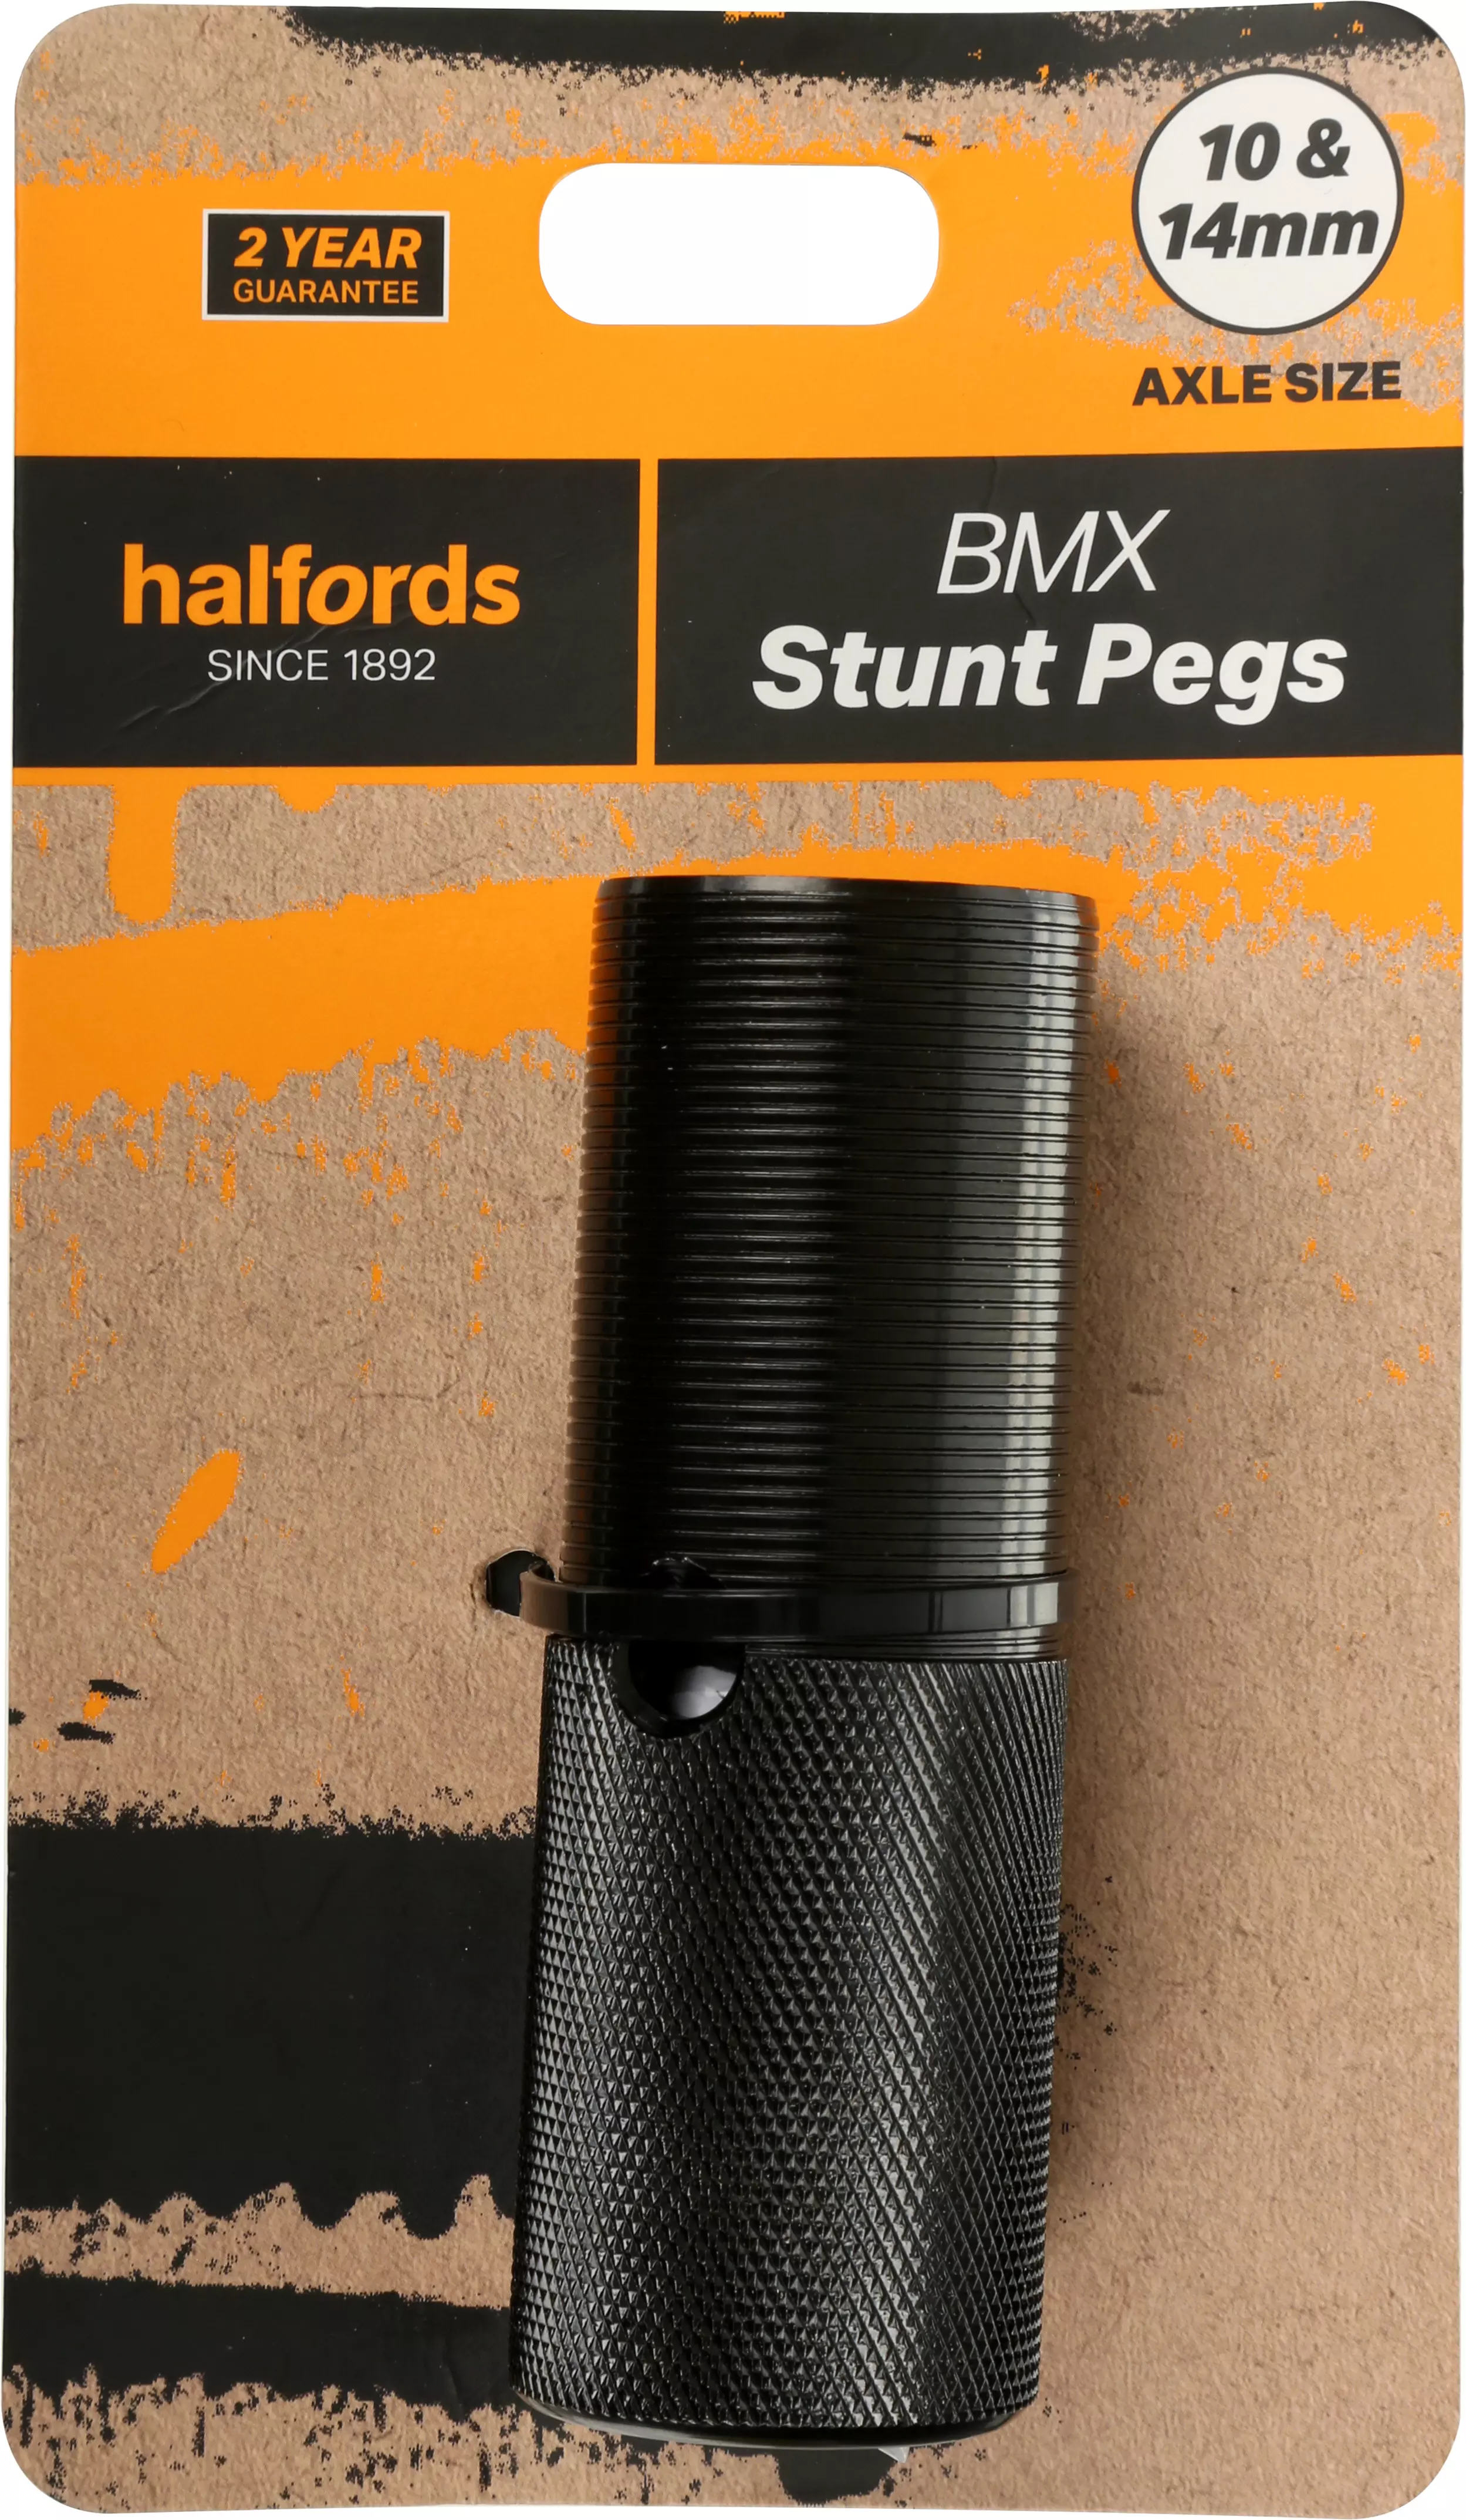 BMX Stunt Pegs - Matte Black | Halfords UK